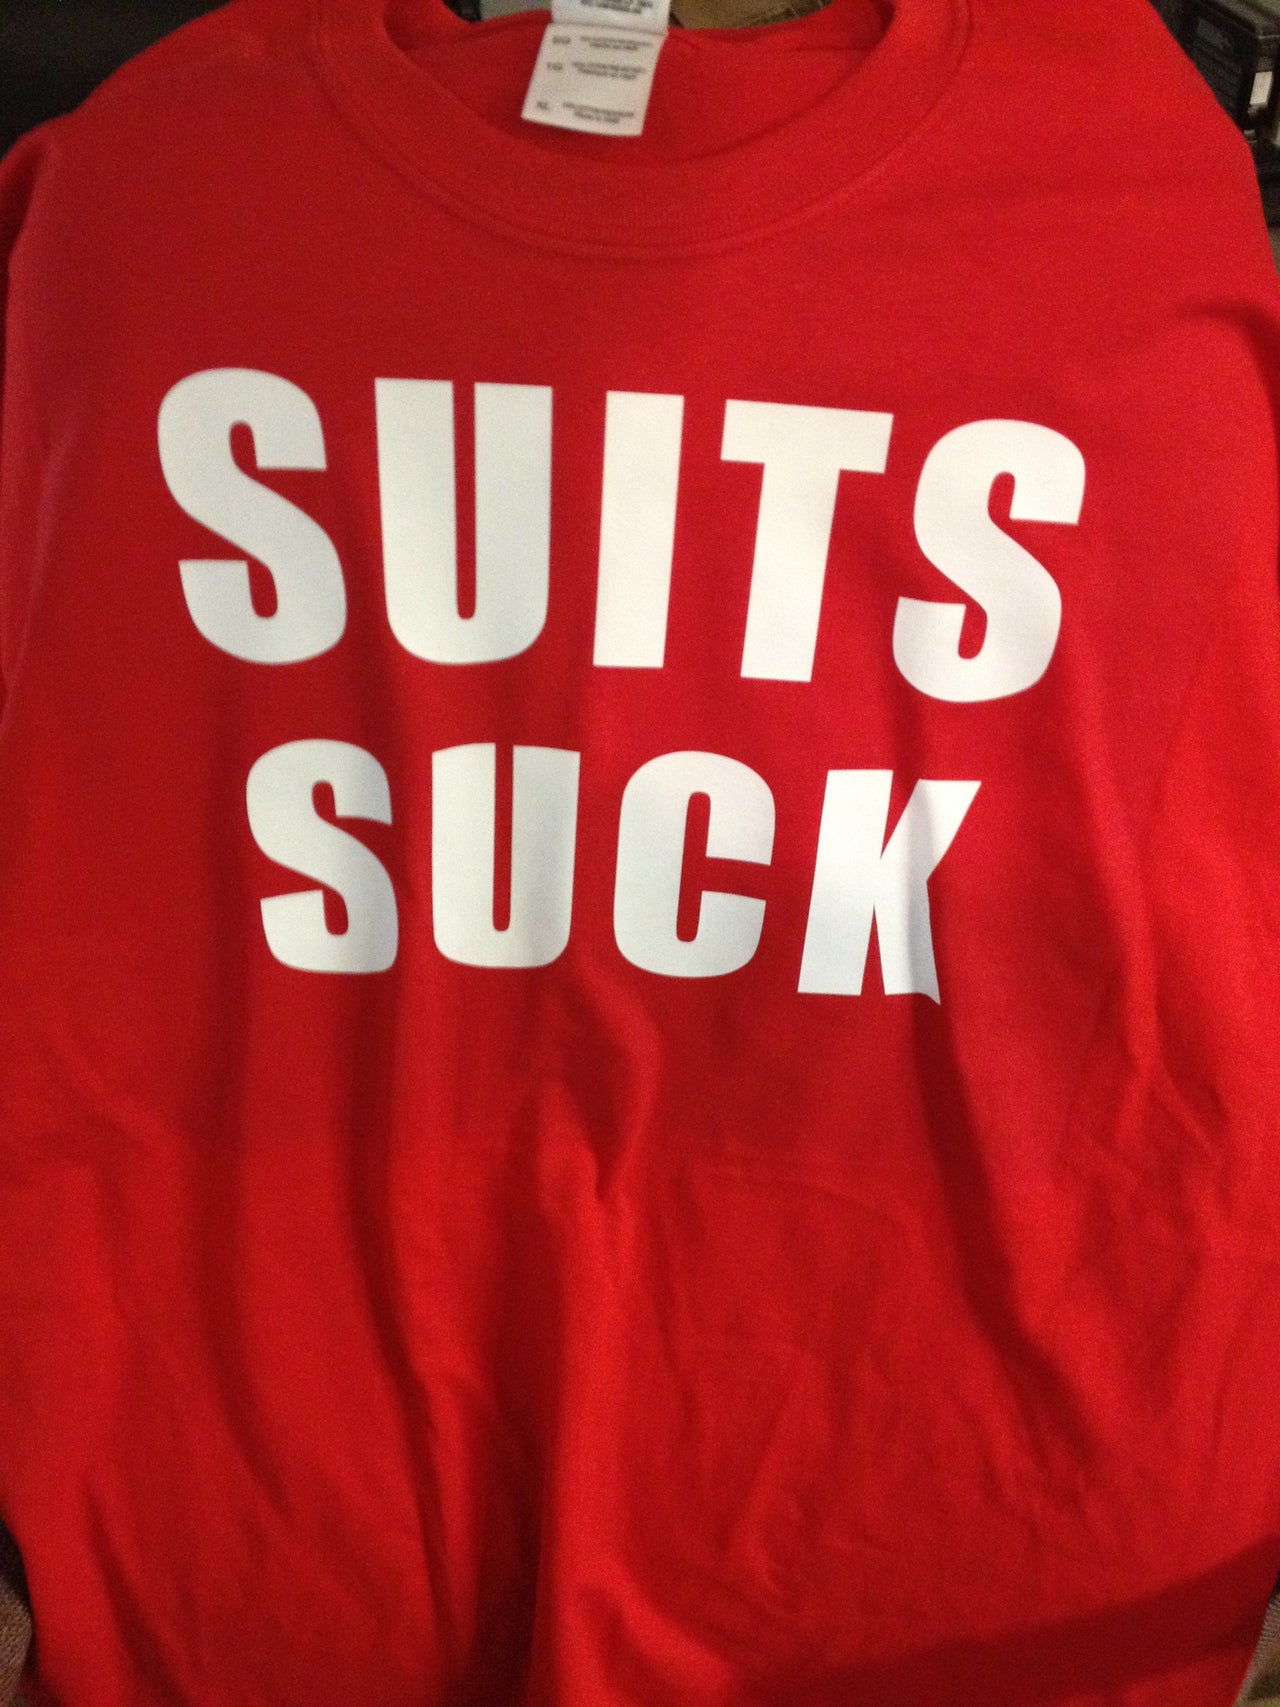 Suits Suck Tshirt: Red With White Print - TshirtNow.net - 3